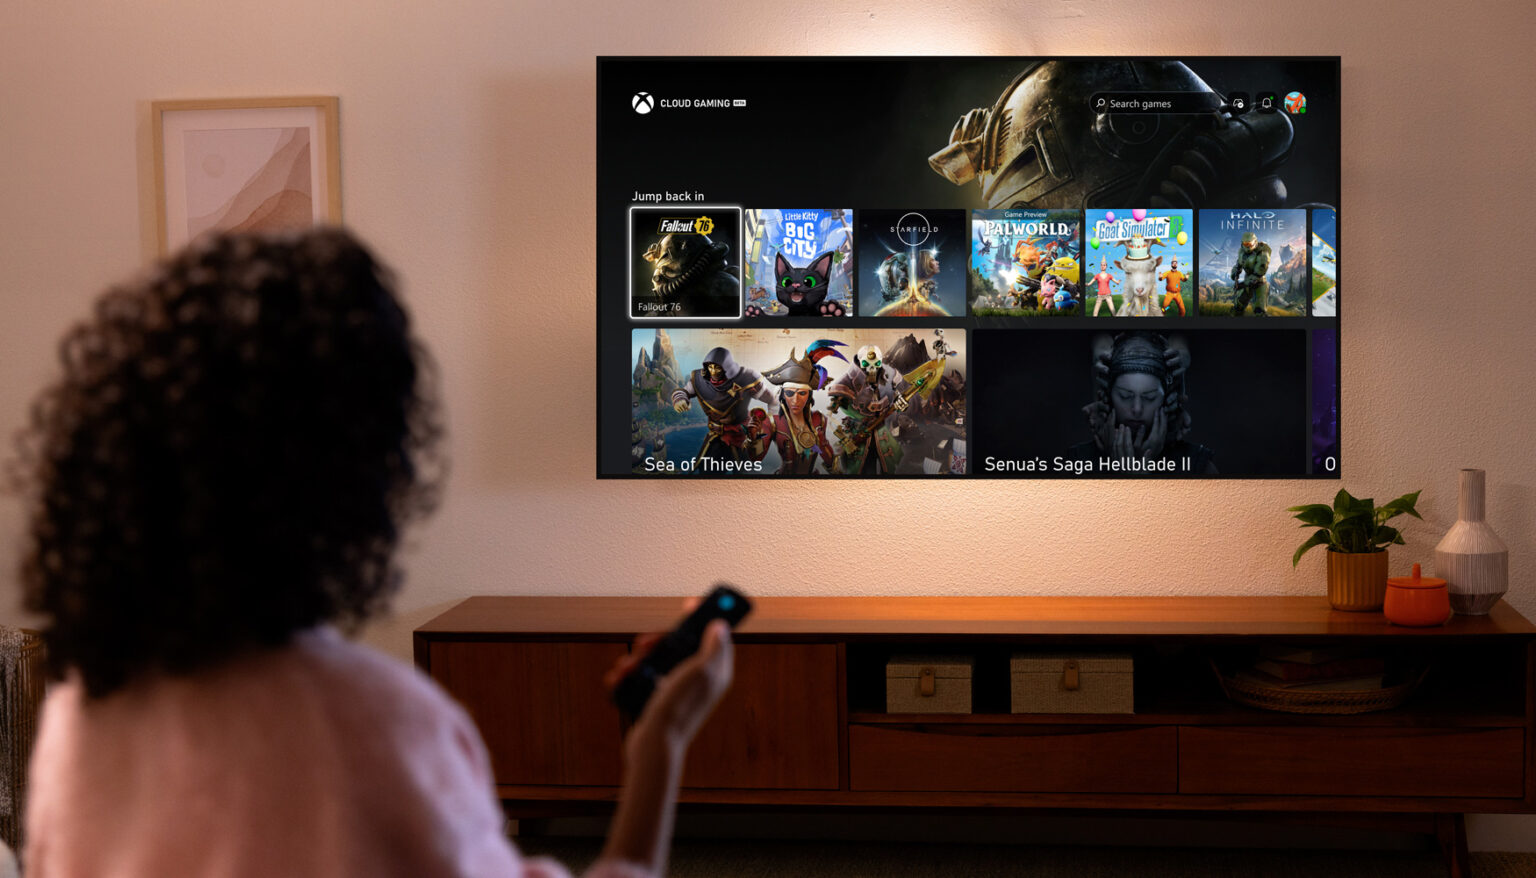 Xbox與亞馬遜合作 通過Fire TV設備提供Xbox雲遊戲服務